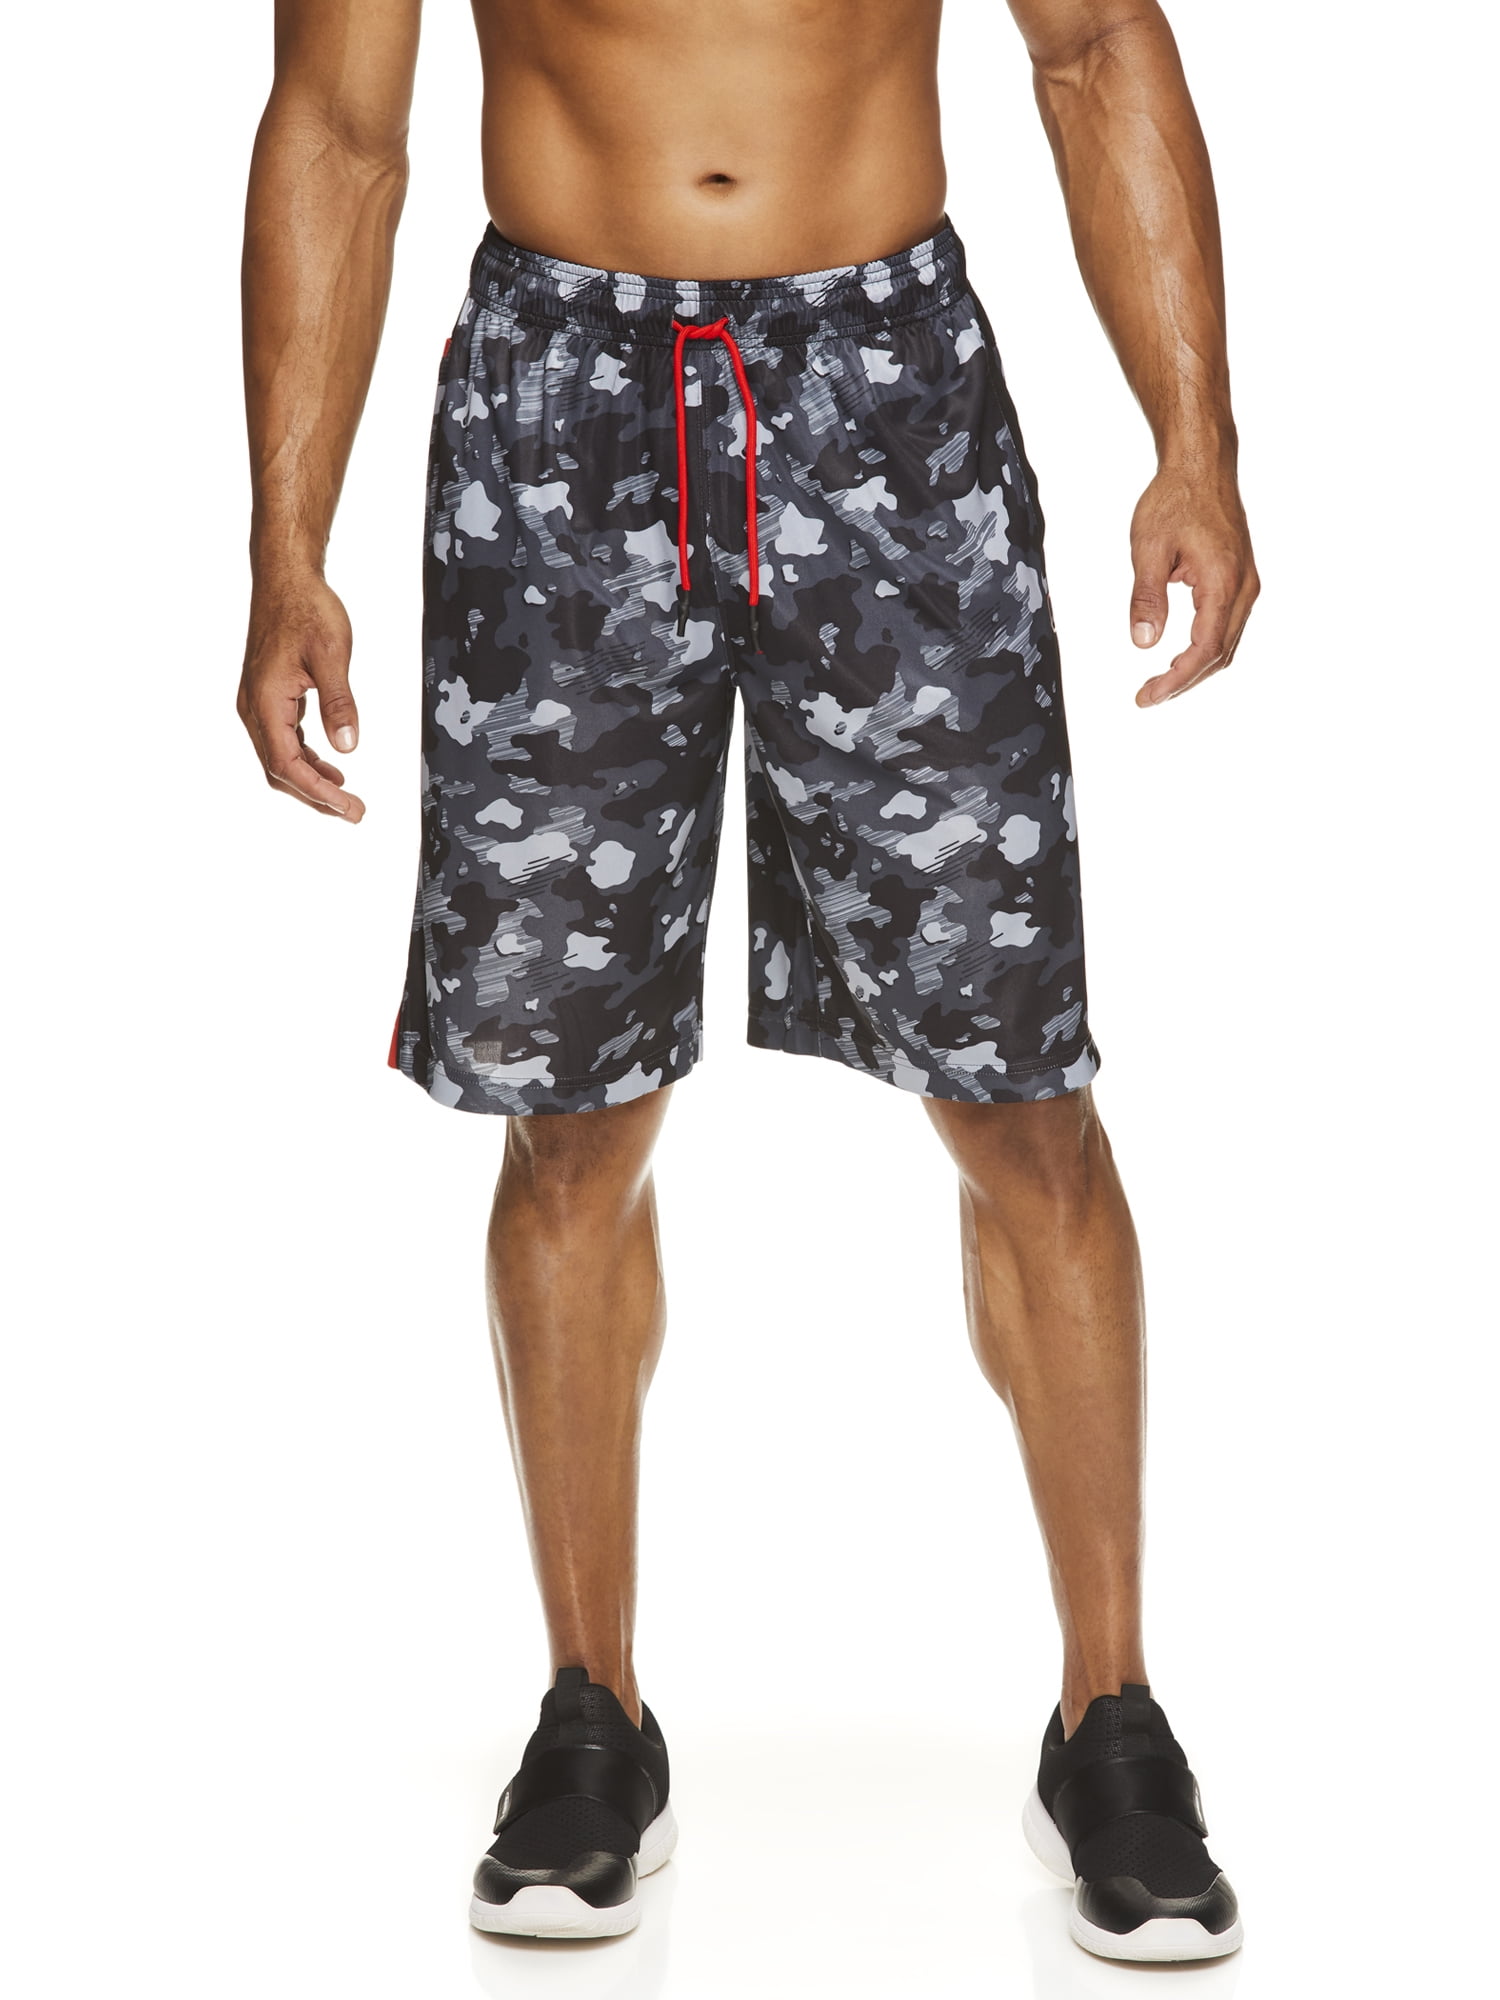 RIGORER Mens Camouflage Mesh Basketball Shorts with Pockets 